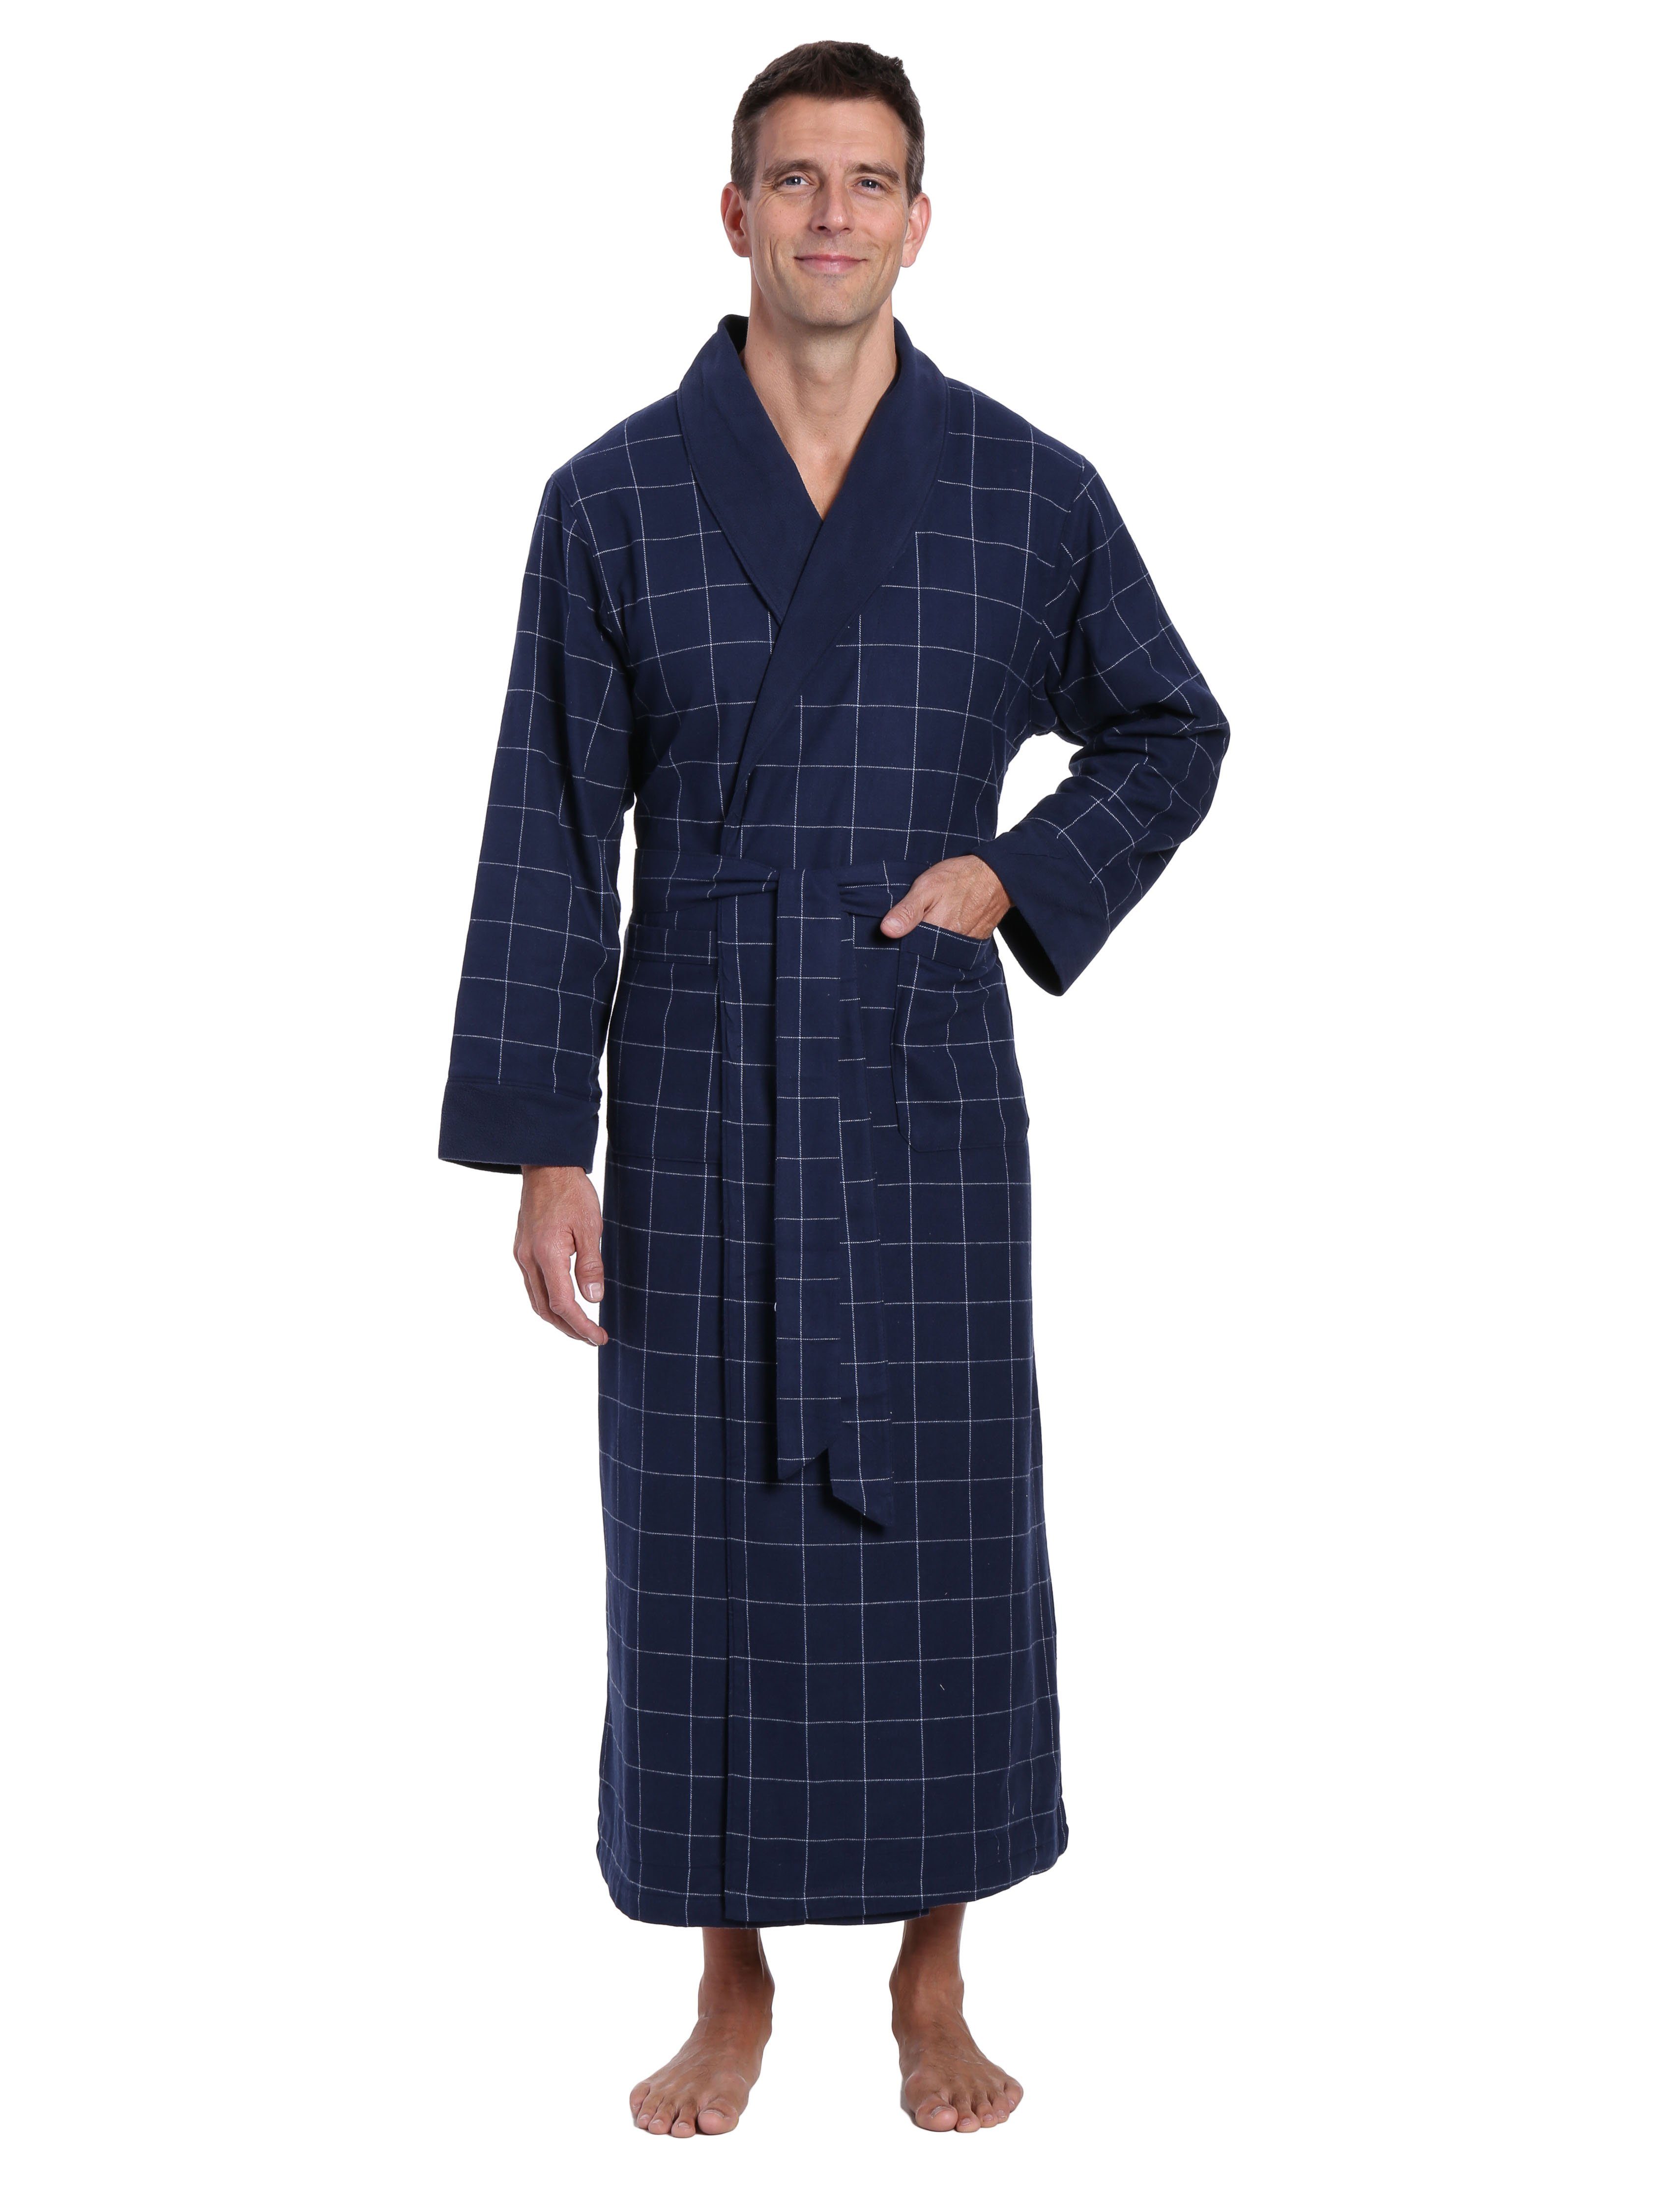 Noble Mount Men's 100% Cotton Flannel Fleece Lined Robe